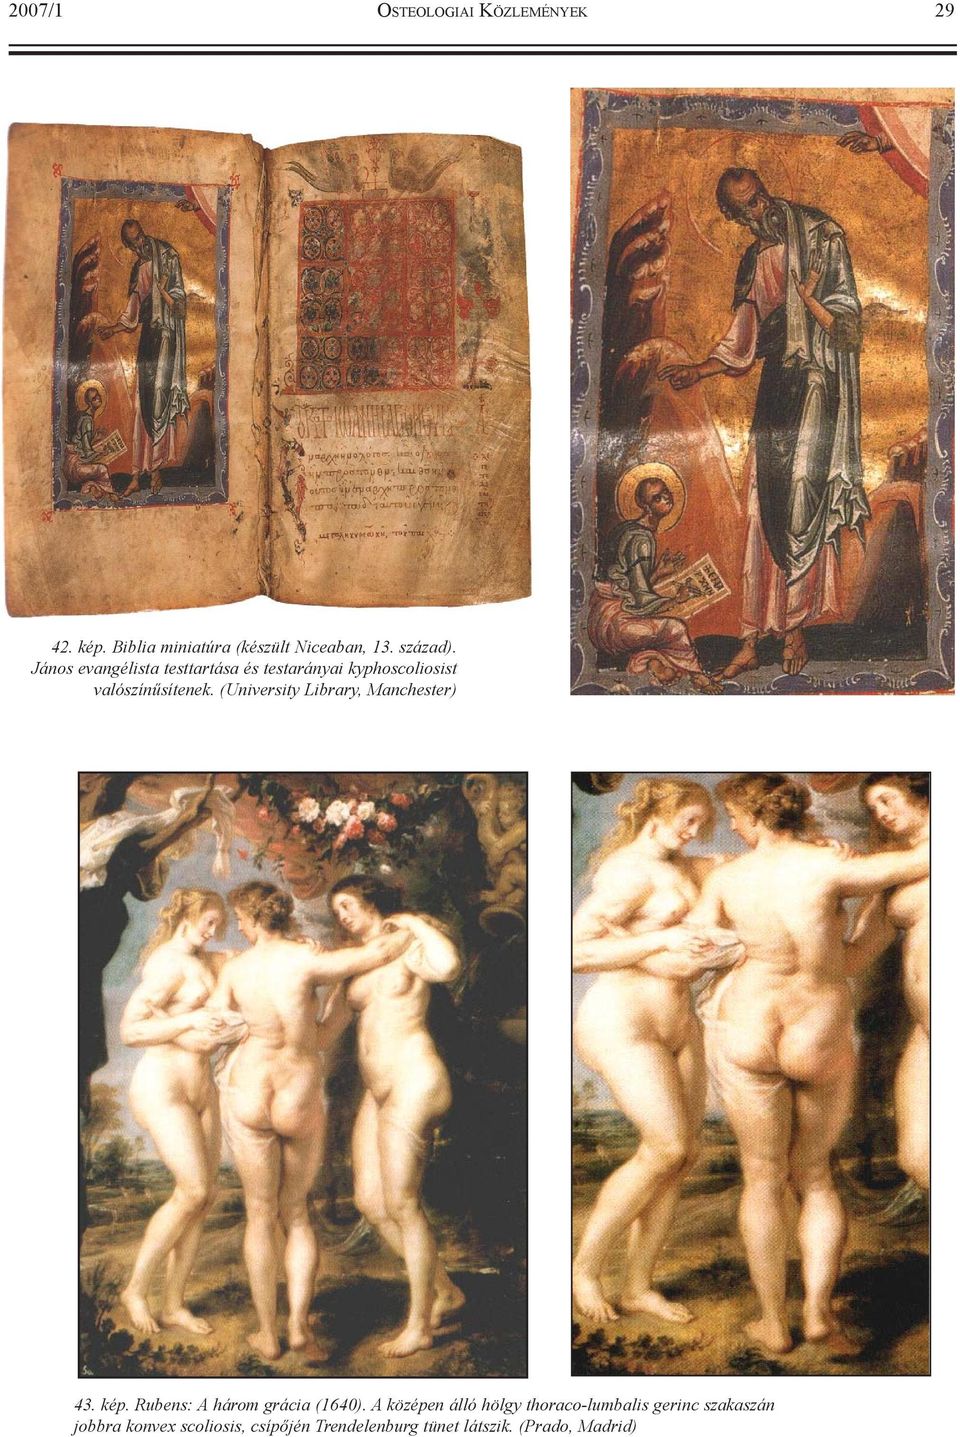 (University Library, Manchester) 43. kép. Rubens: A három grácia (1640).